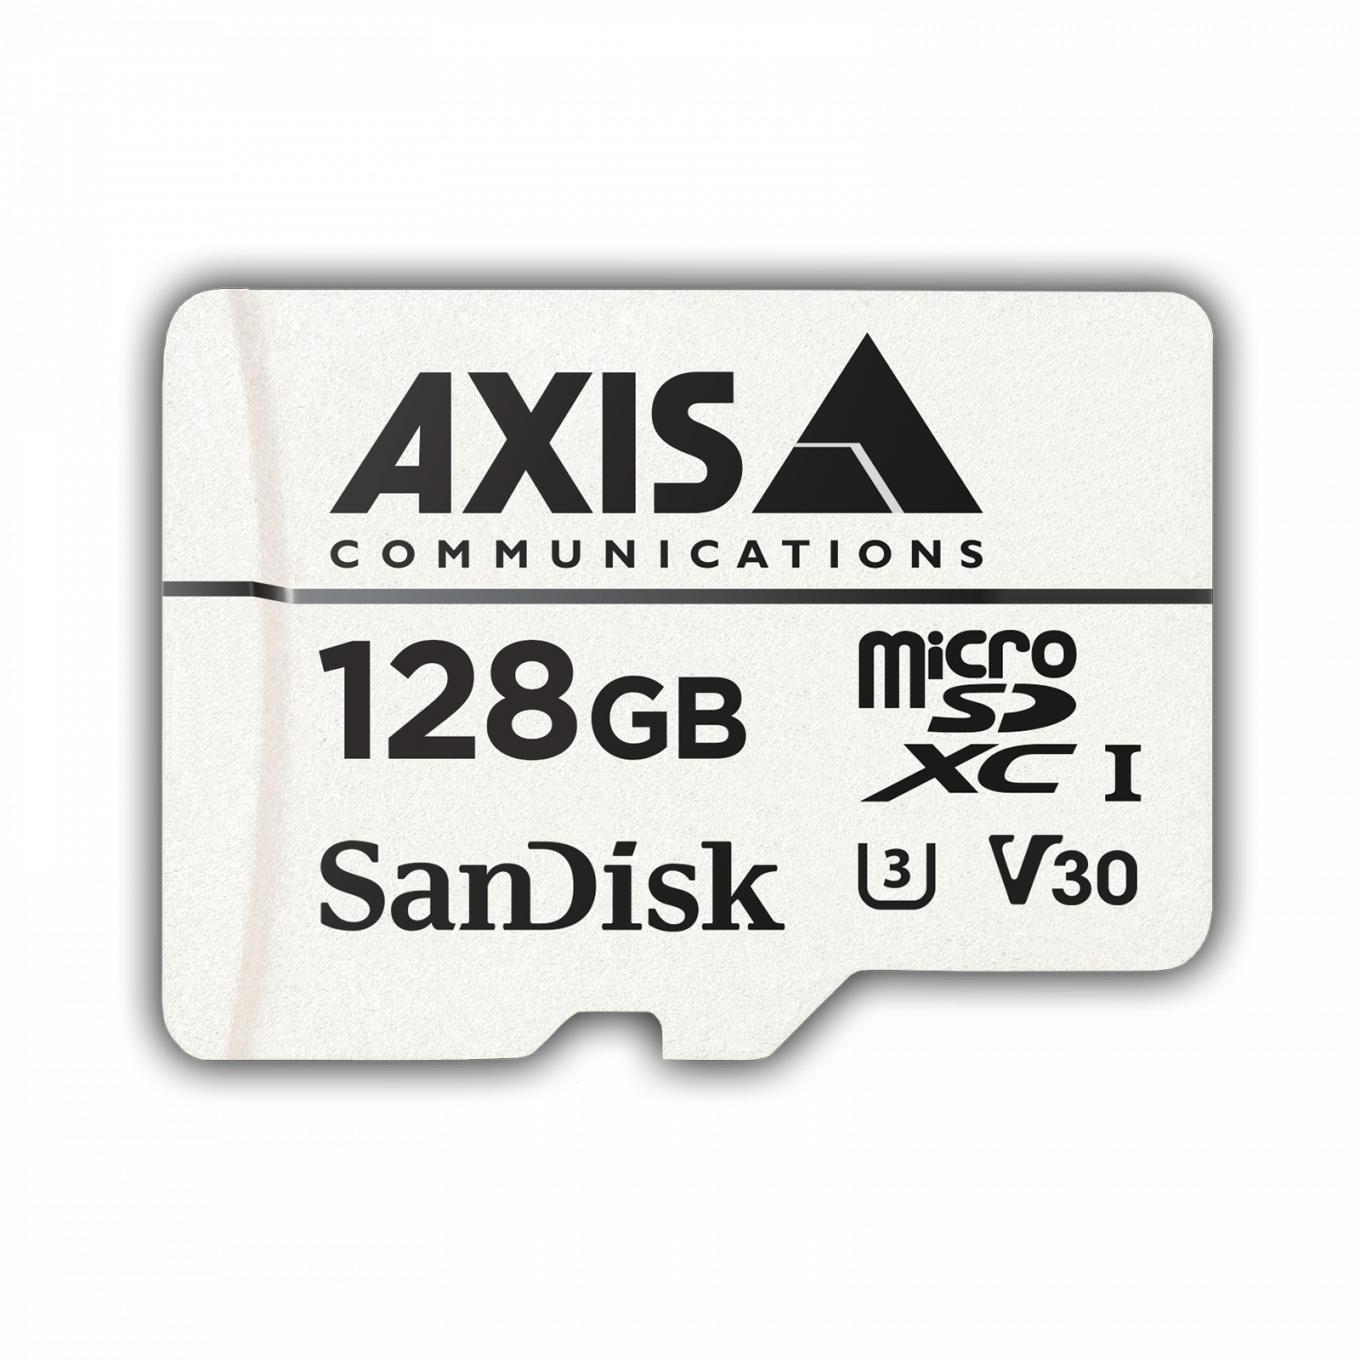 AXIS stockage edge Surveillance Card 128 GB par l'avant